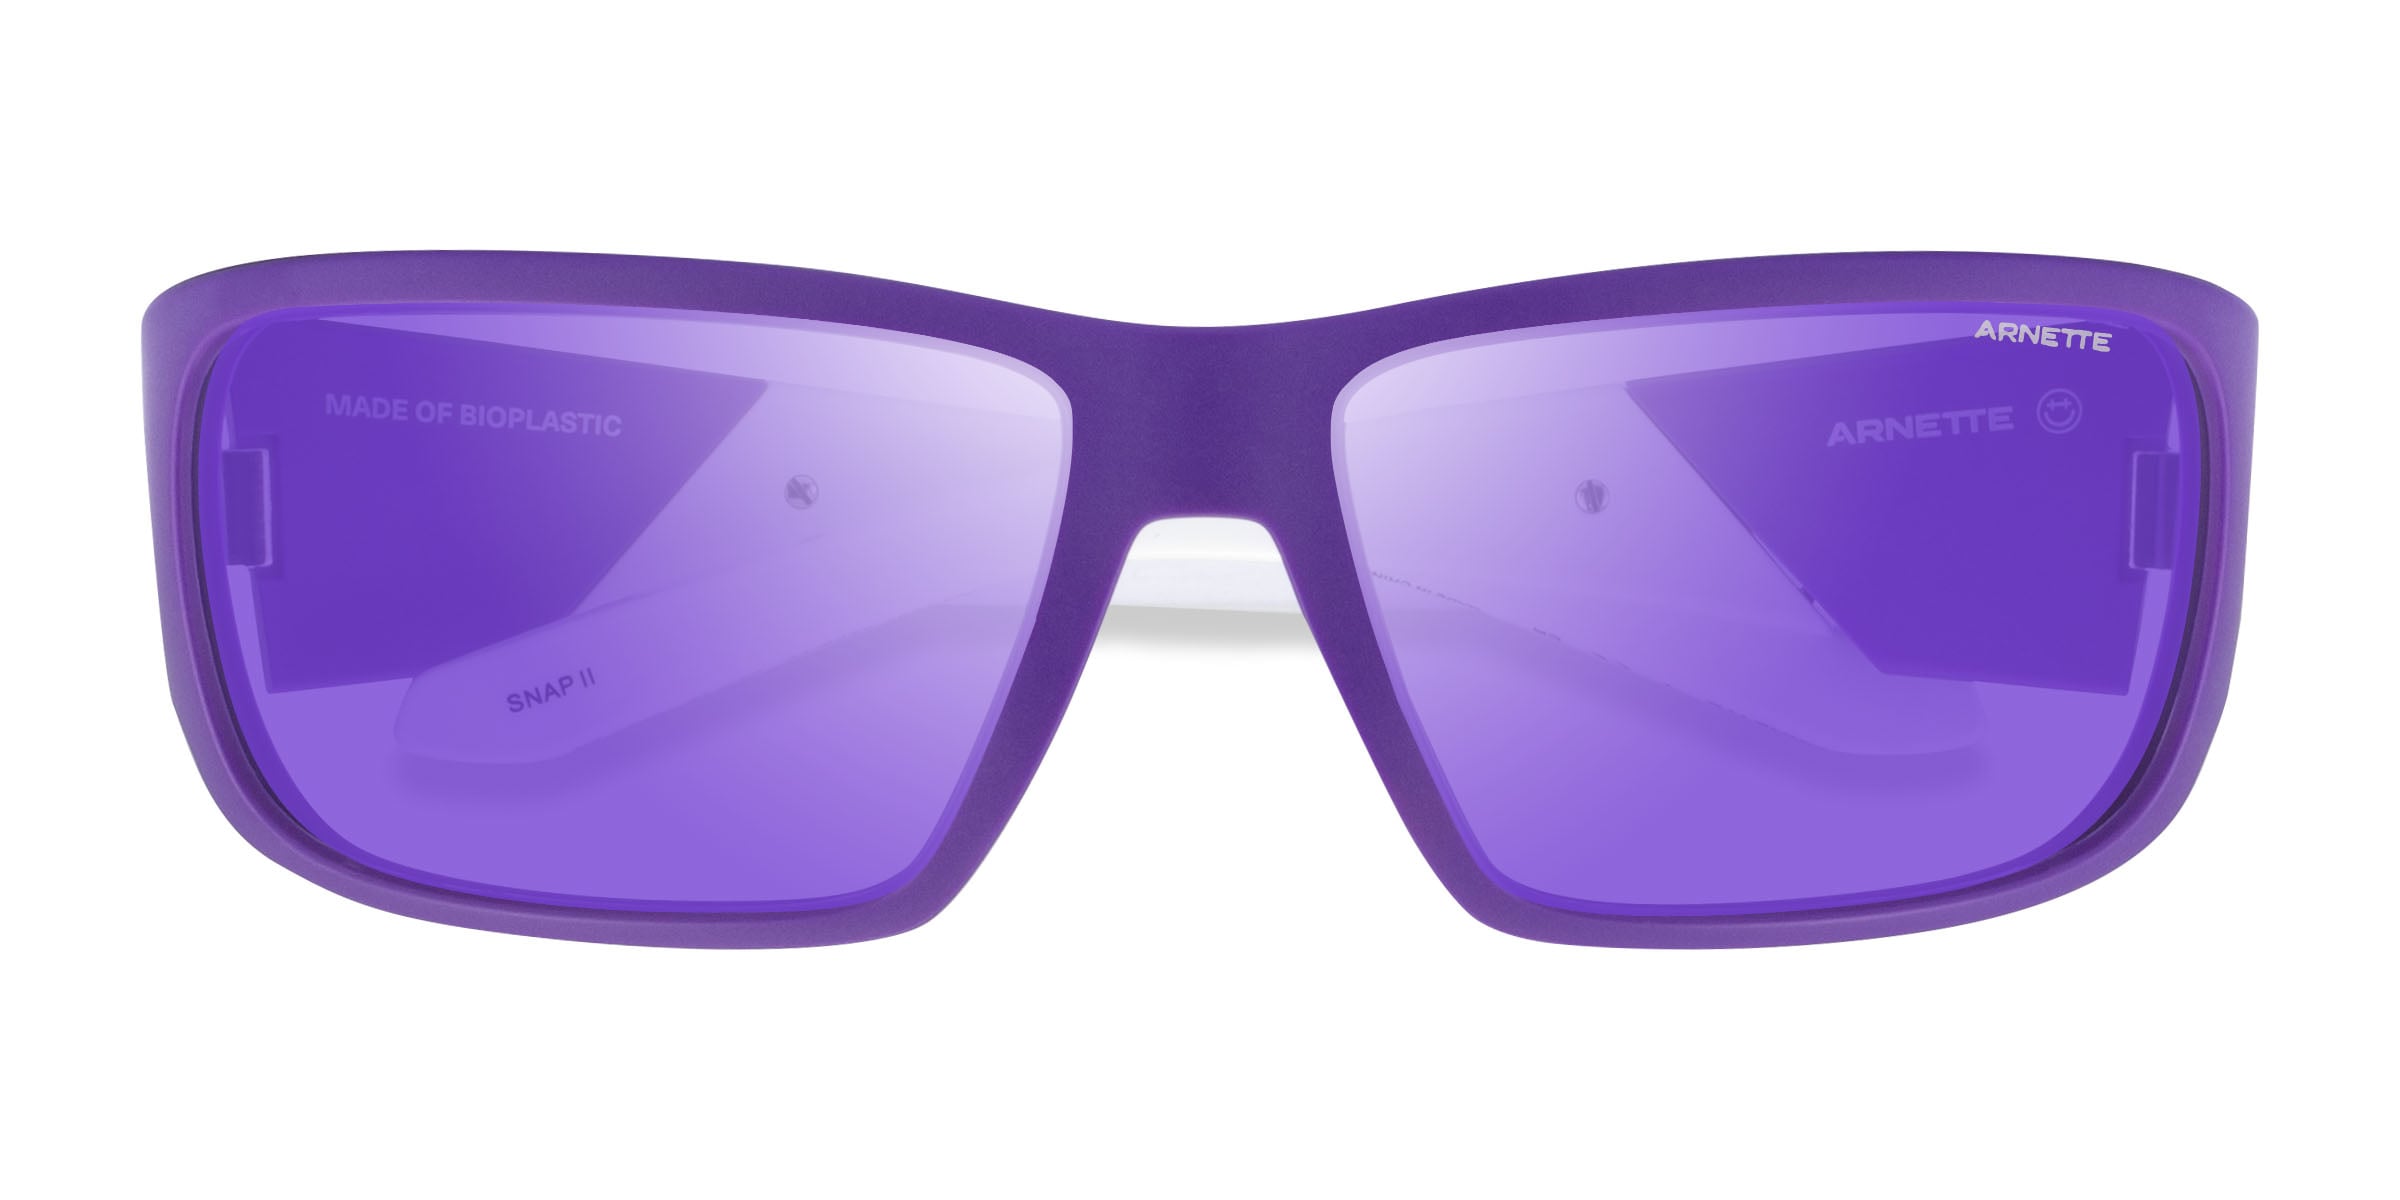 ARNETTE Sunglasses Styles | Eyebuydirect